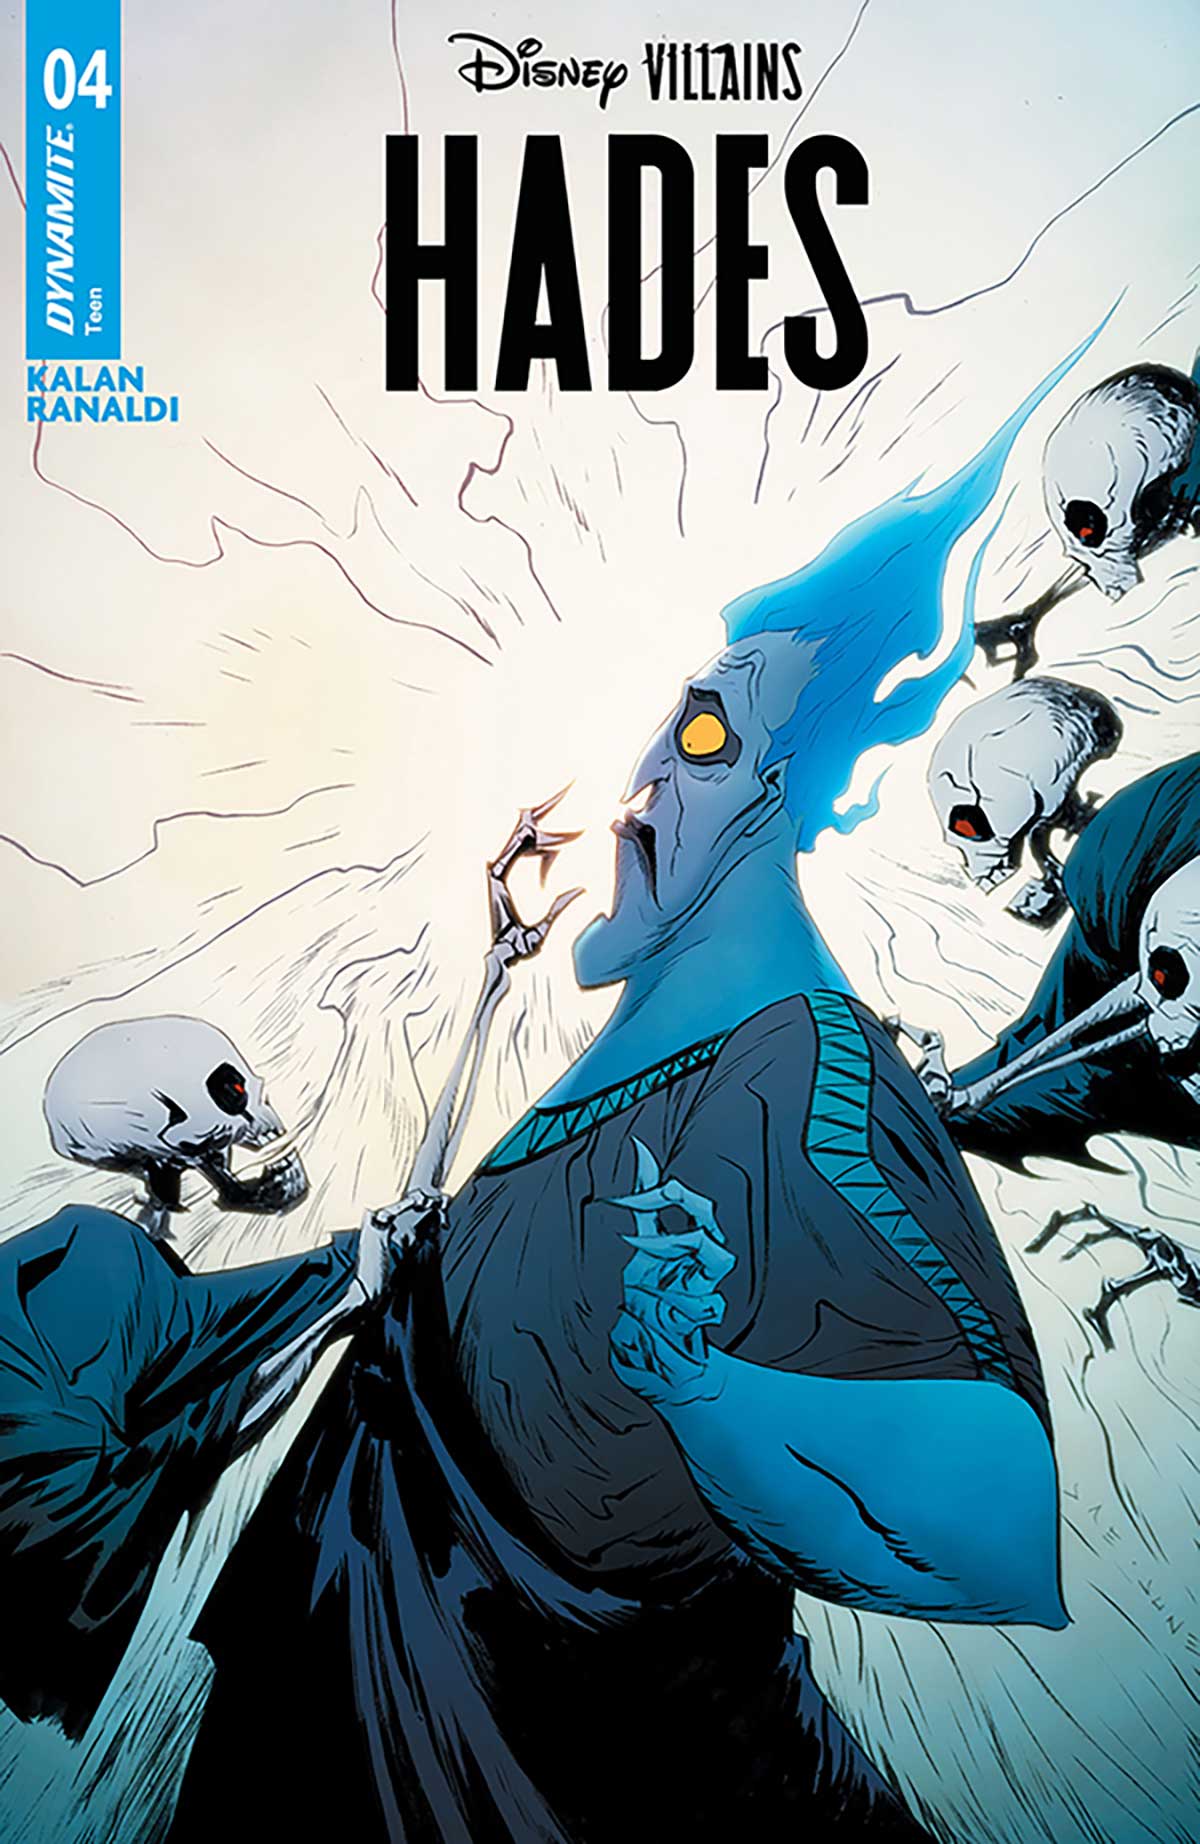 DISNEY VILLAINS: HADES #2 - New Comic Review